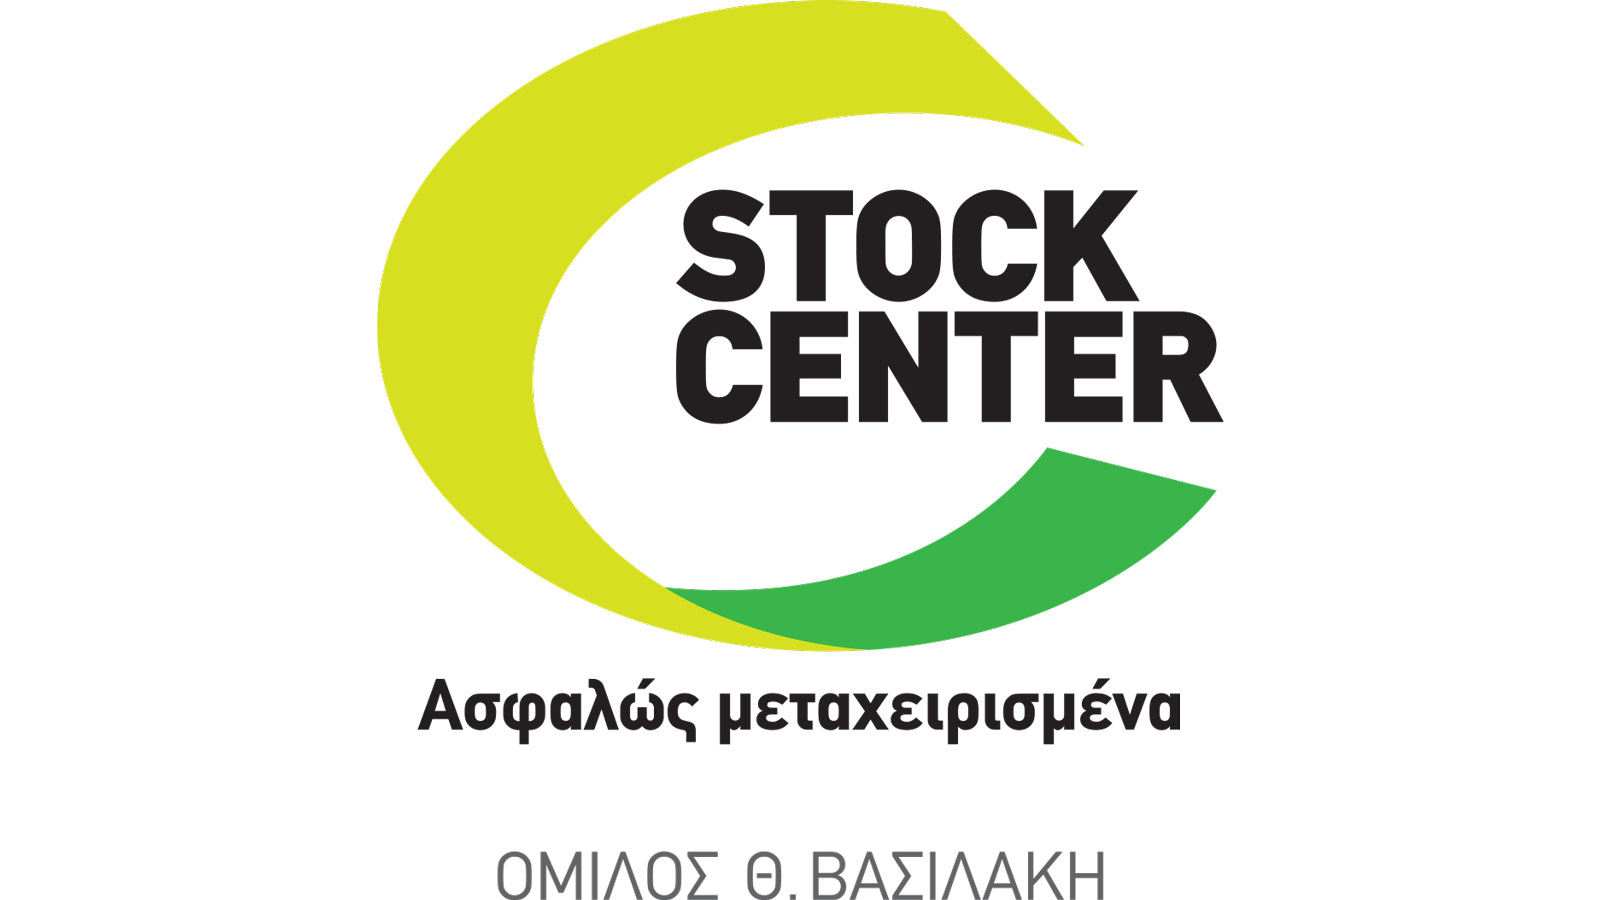 STOCK CENTER: Επιδότηση ανταλλαγής έως 2000 ευρώ